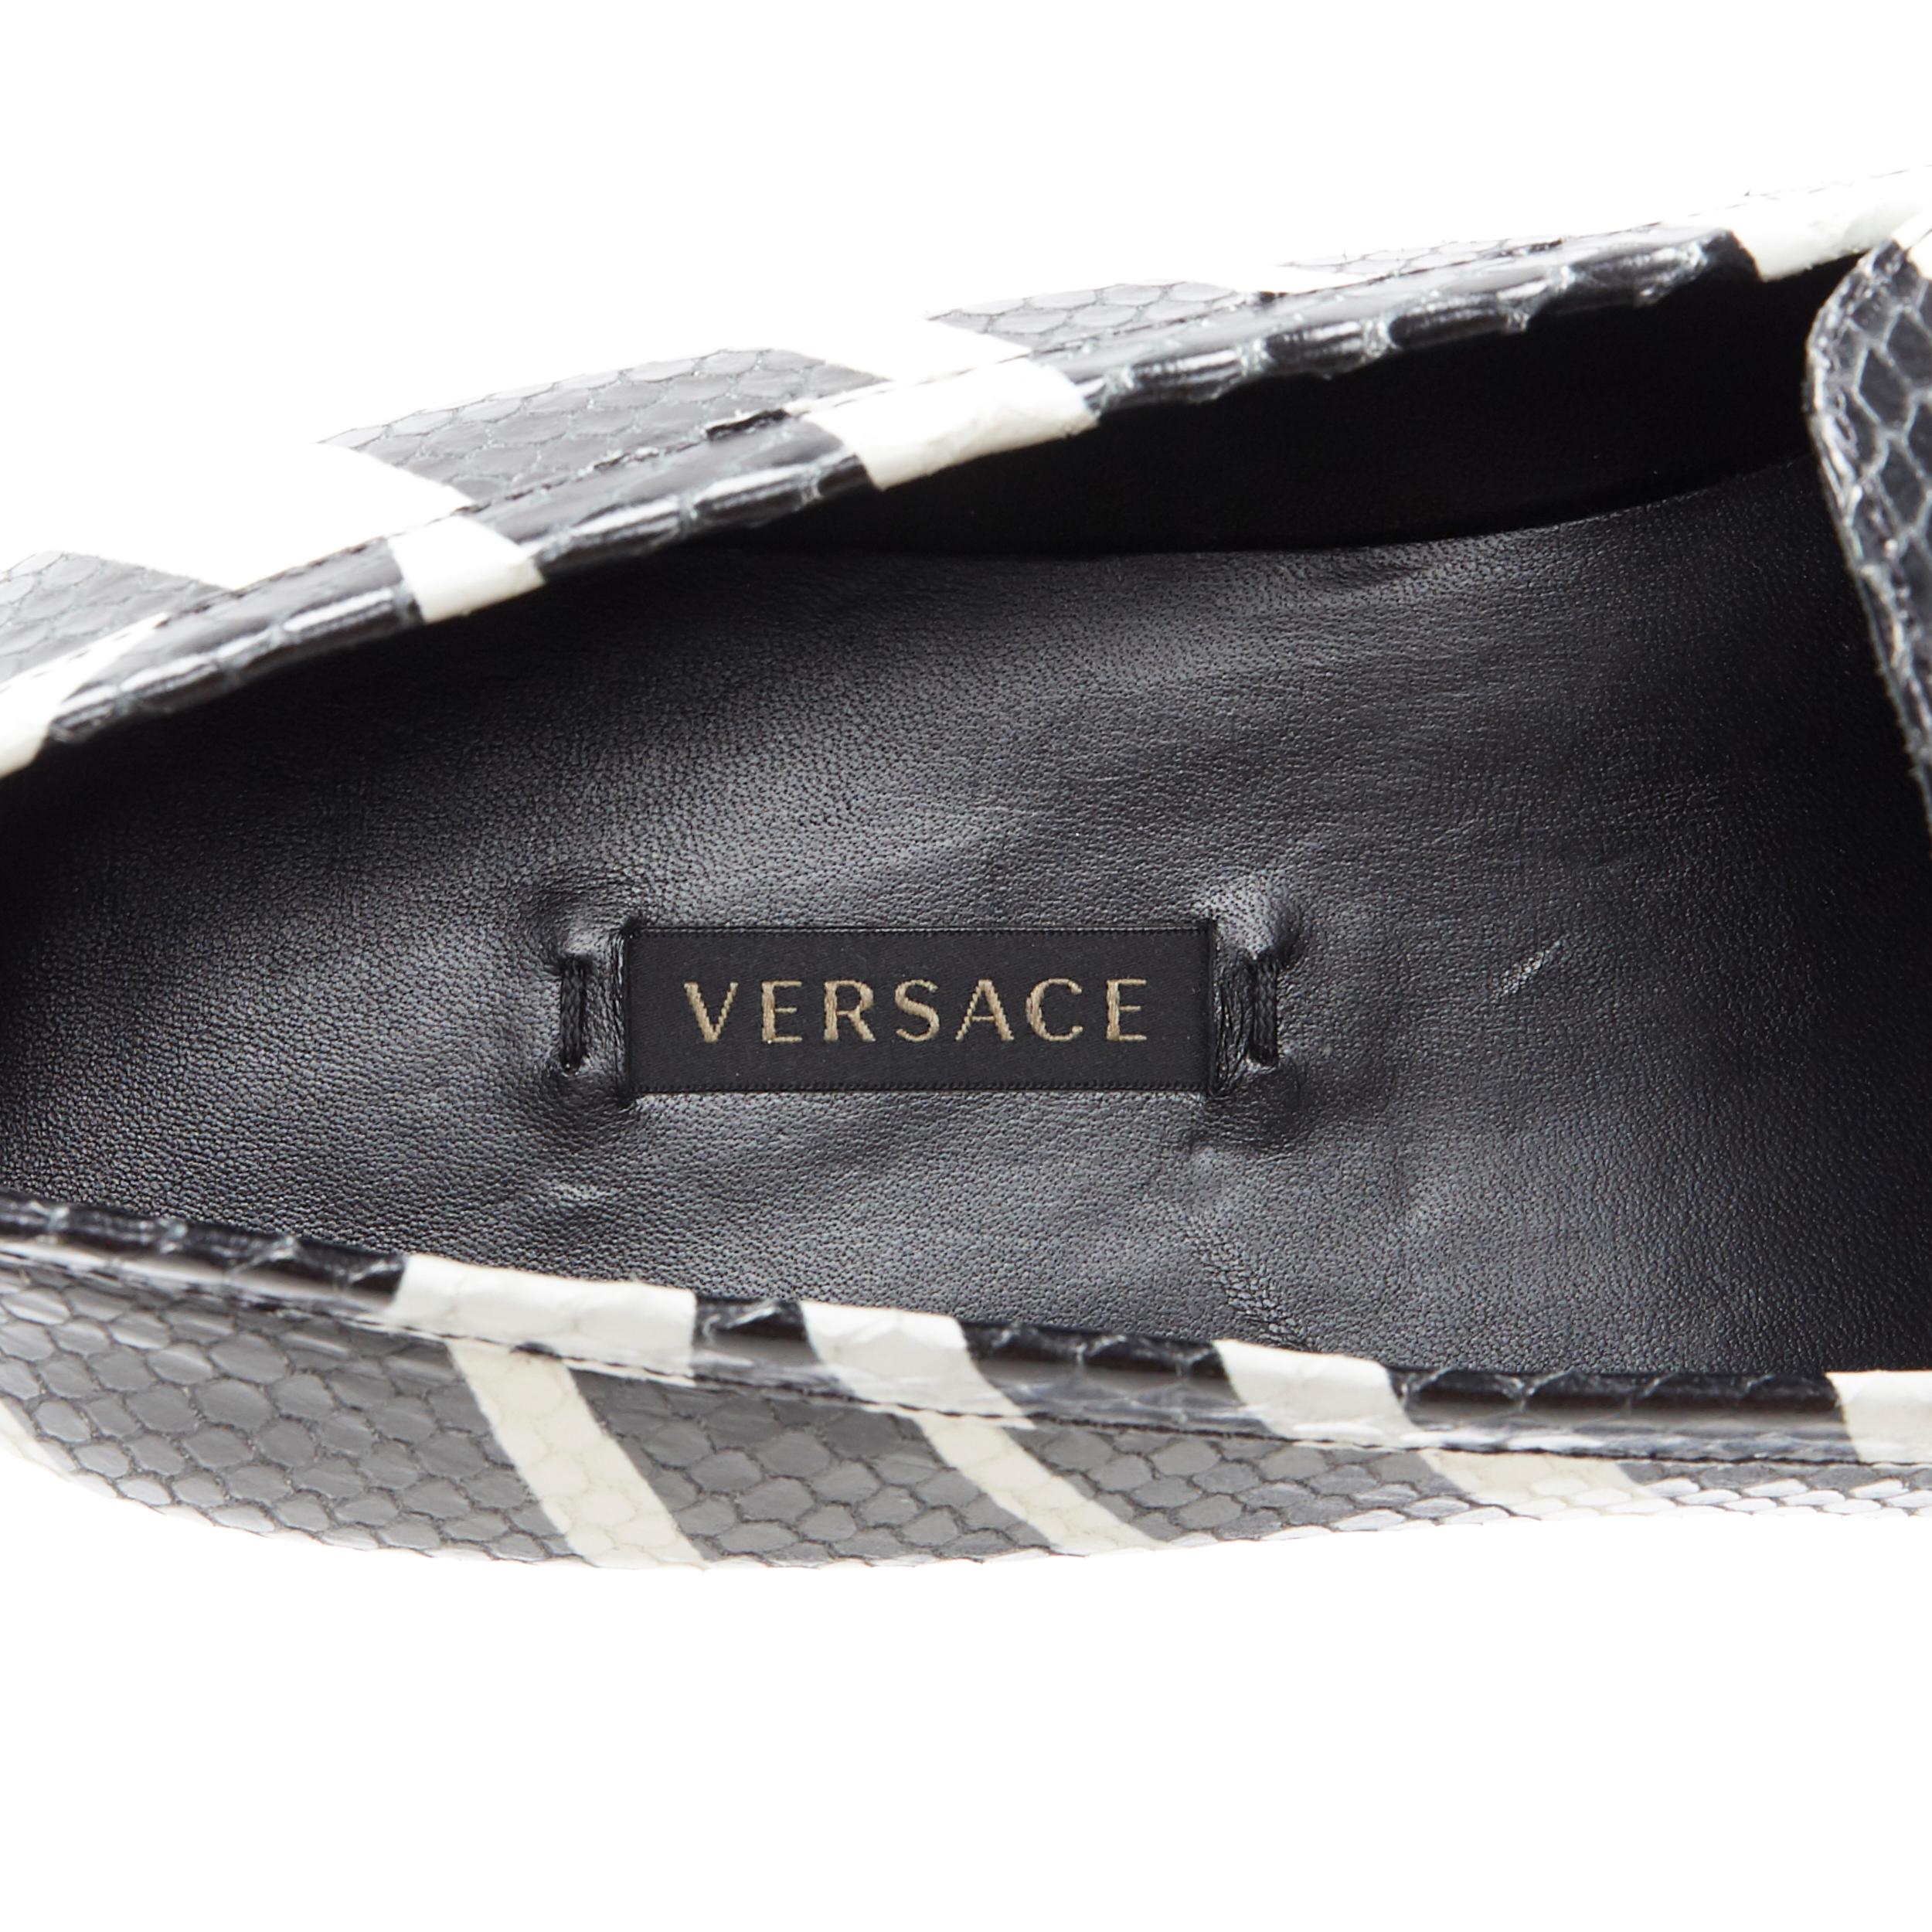 new VERSACE AW19 zebra print scaled calf leather gold Medusa chain loafer EU38 2